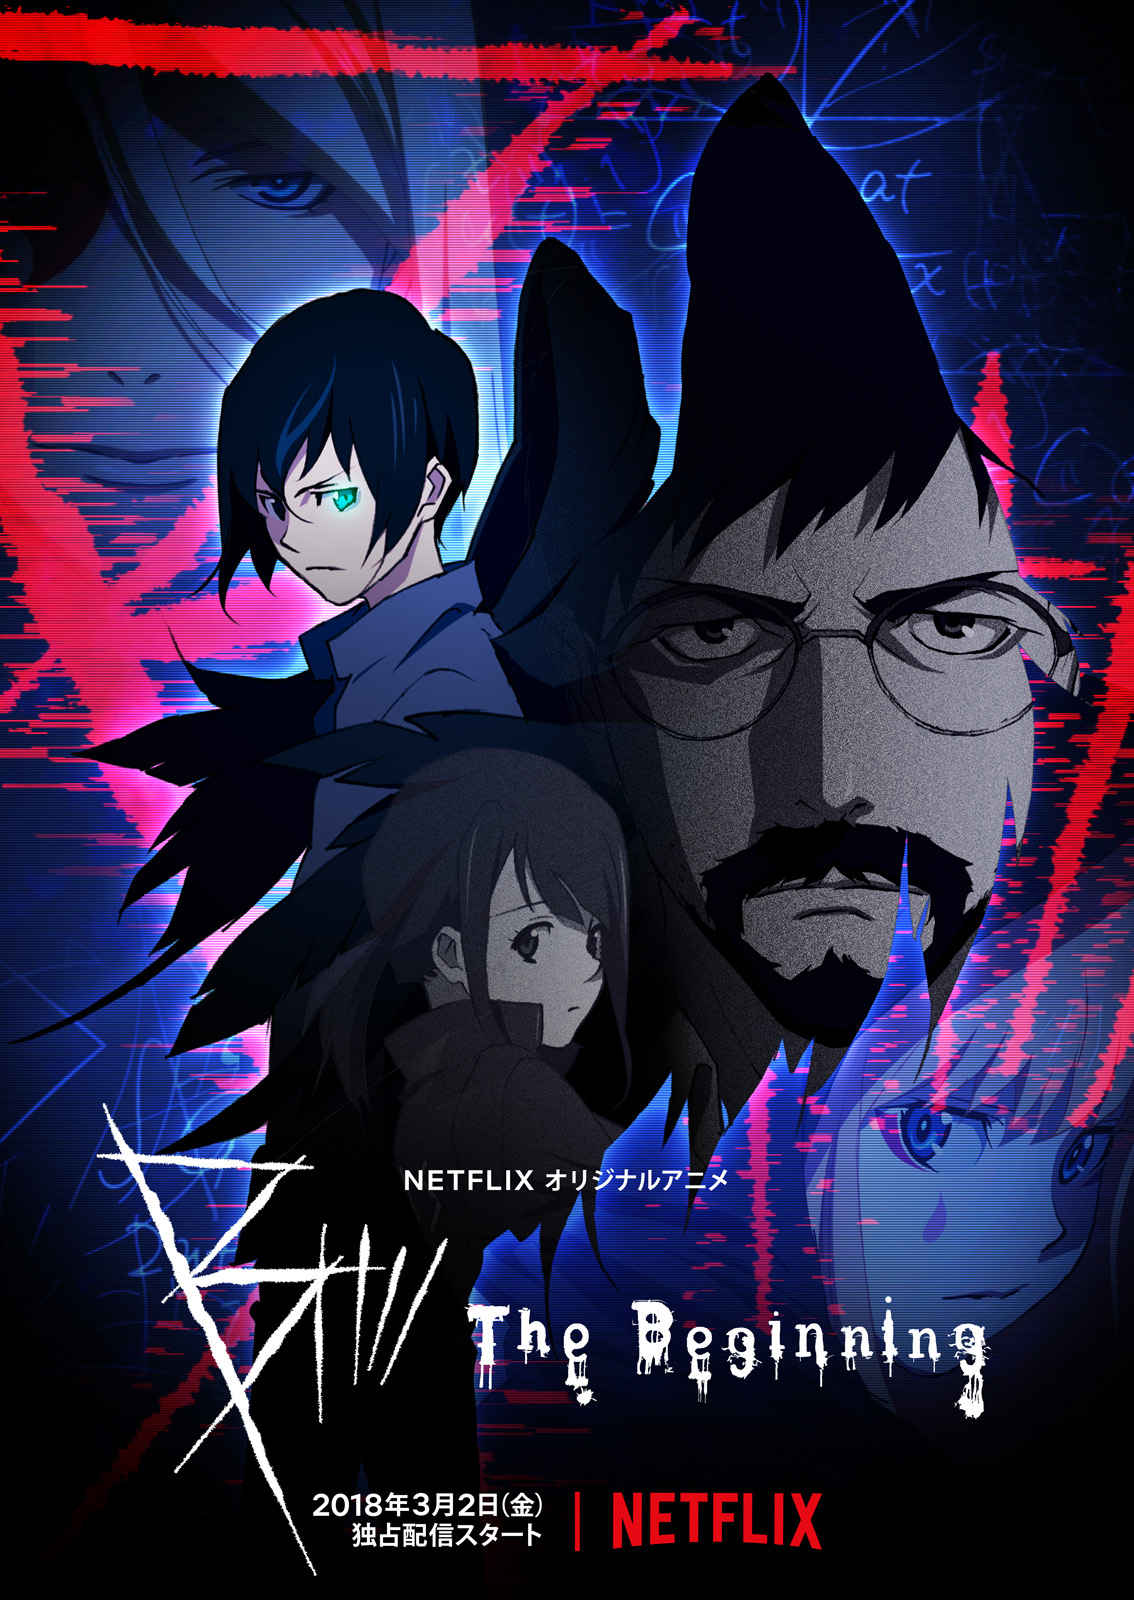 Detective Anime 17 - b the beginning